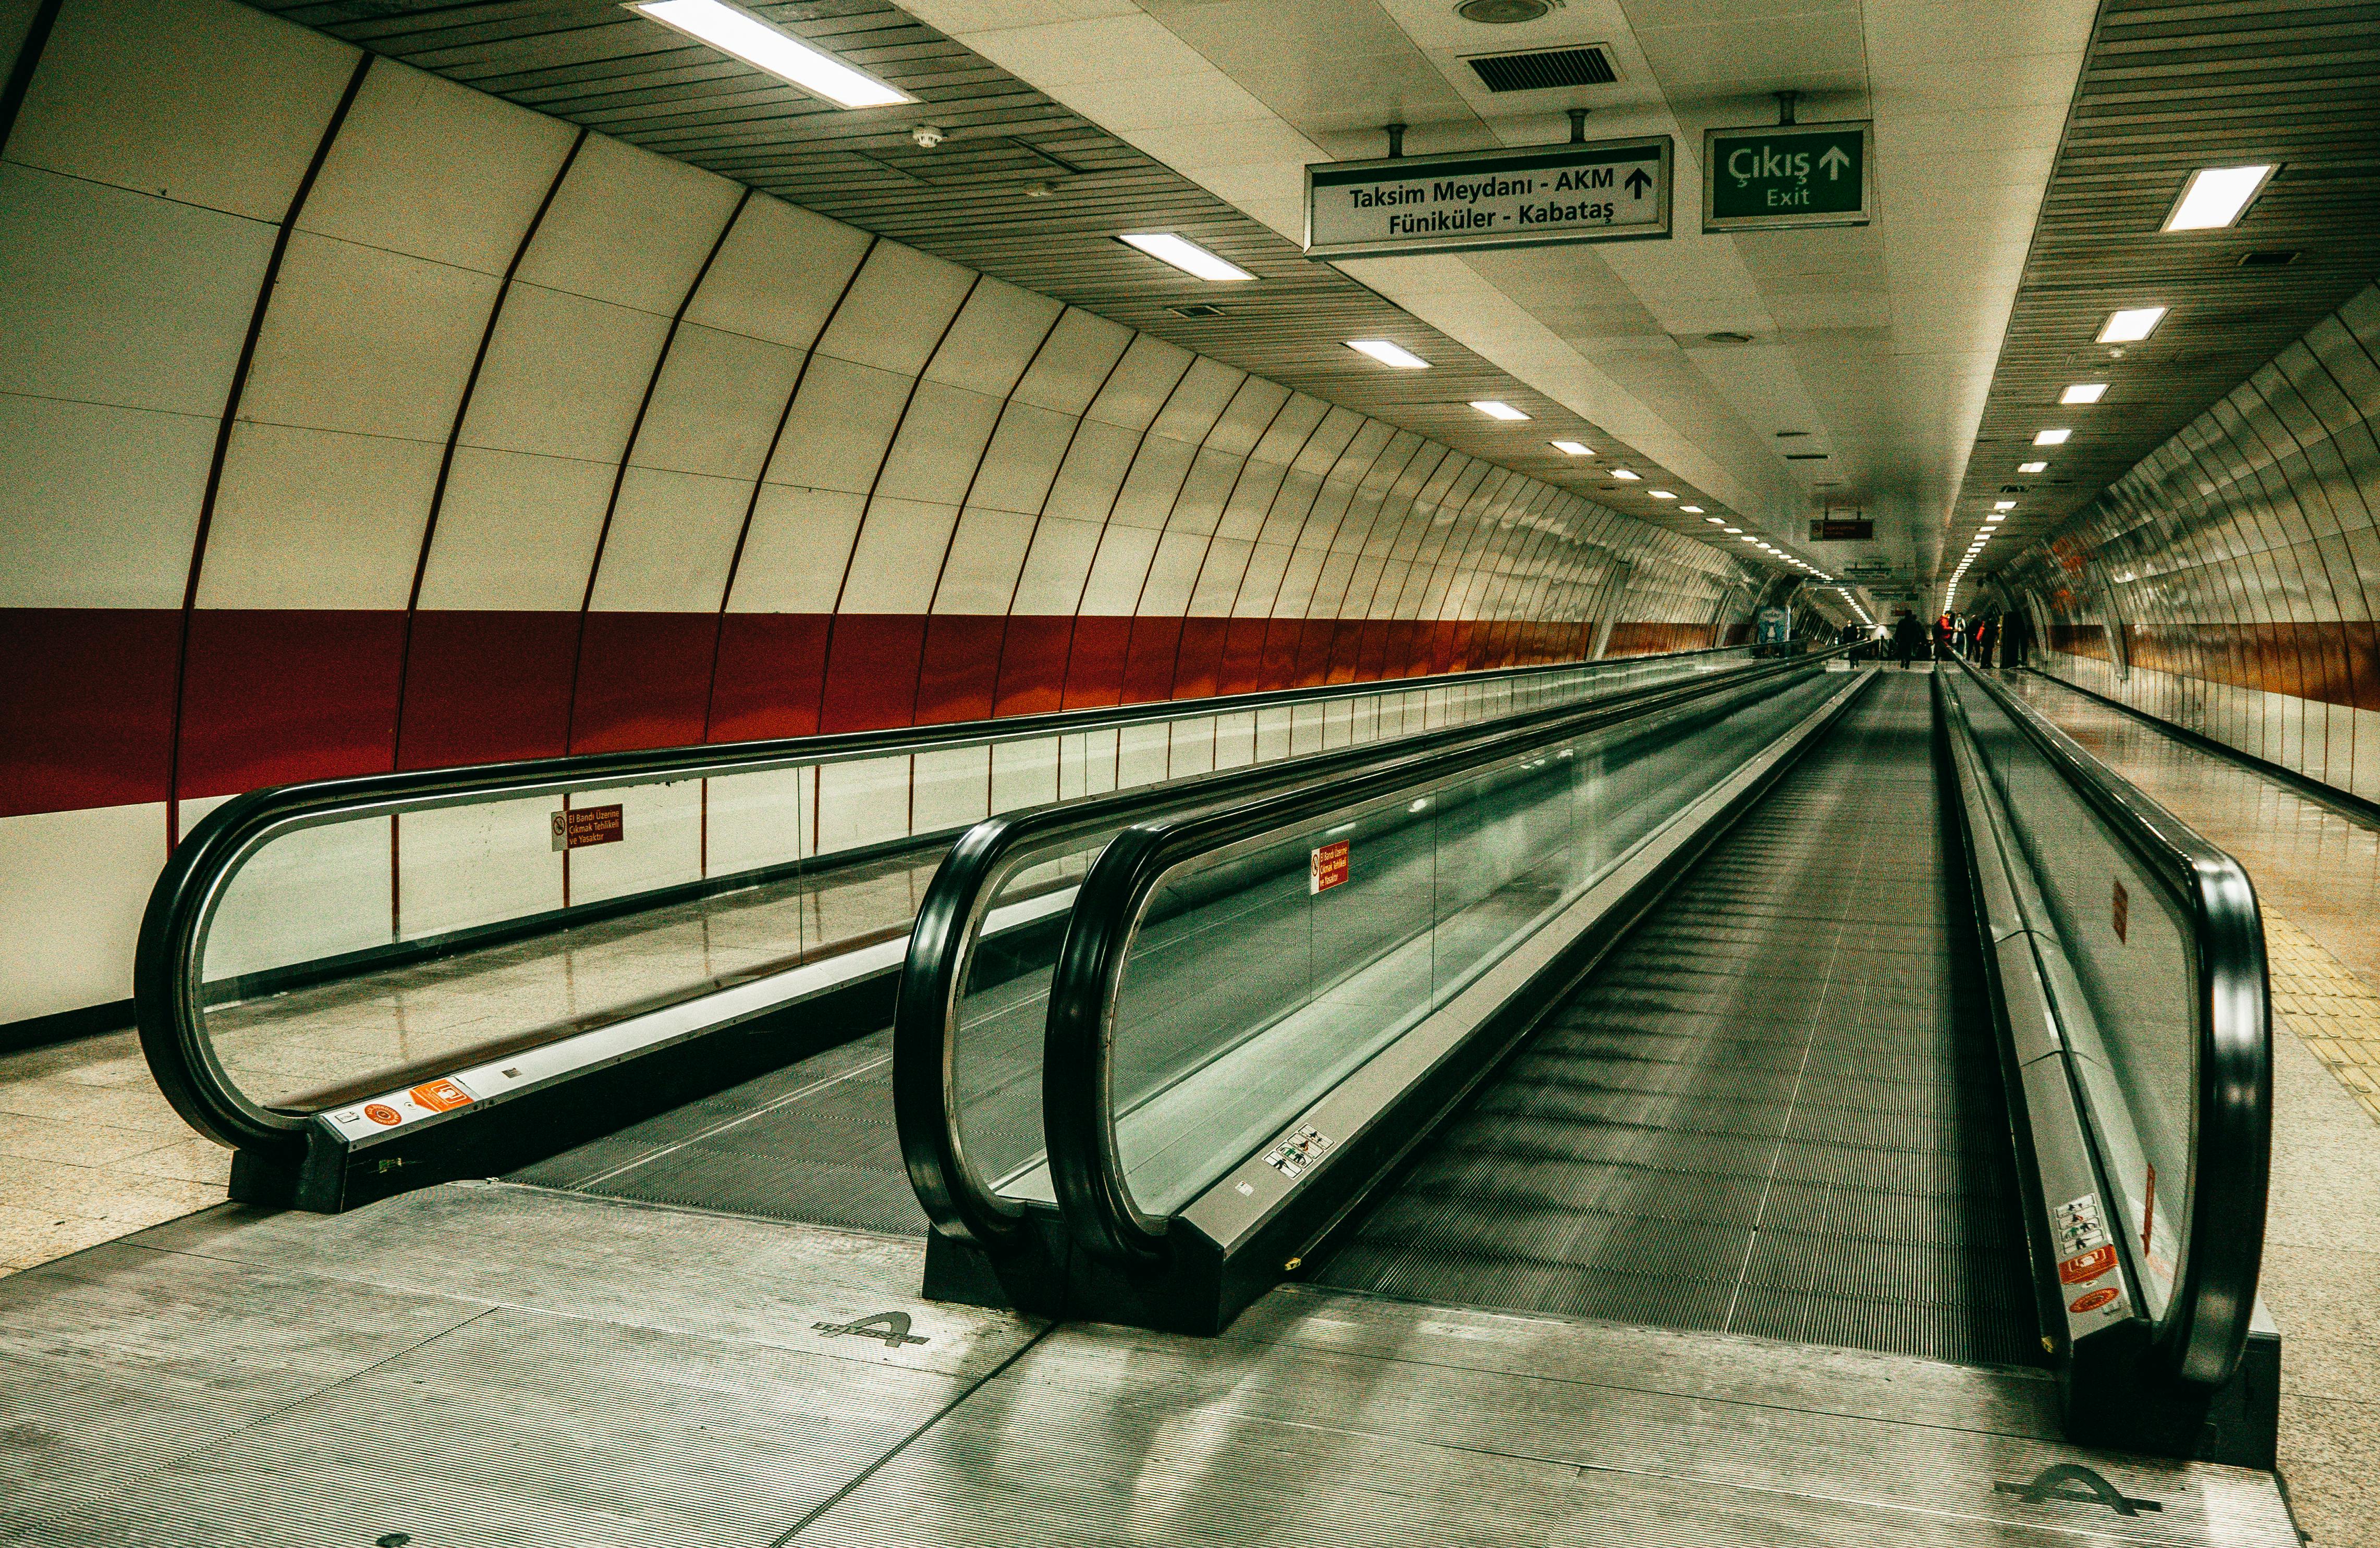 walkalator in istanbul metro subway station